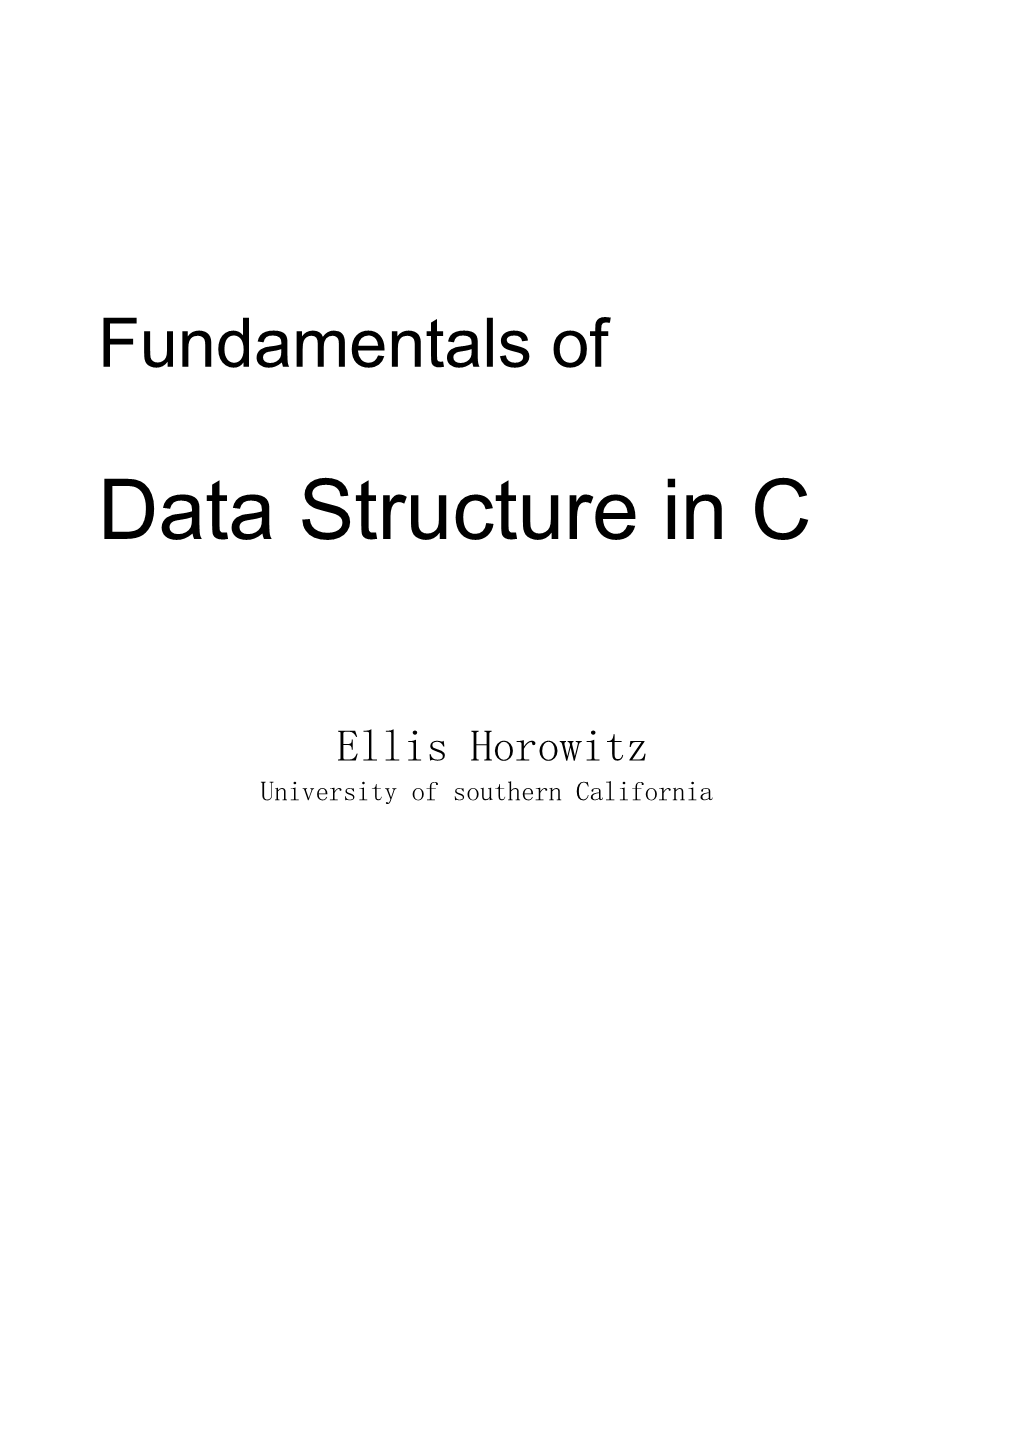 Data Structure + Algorithm = Programming